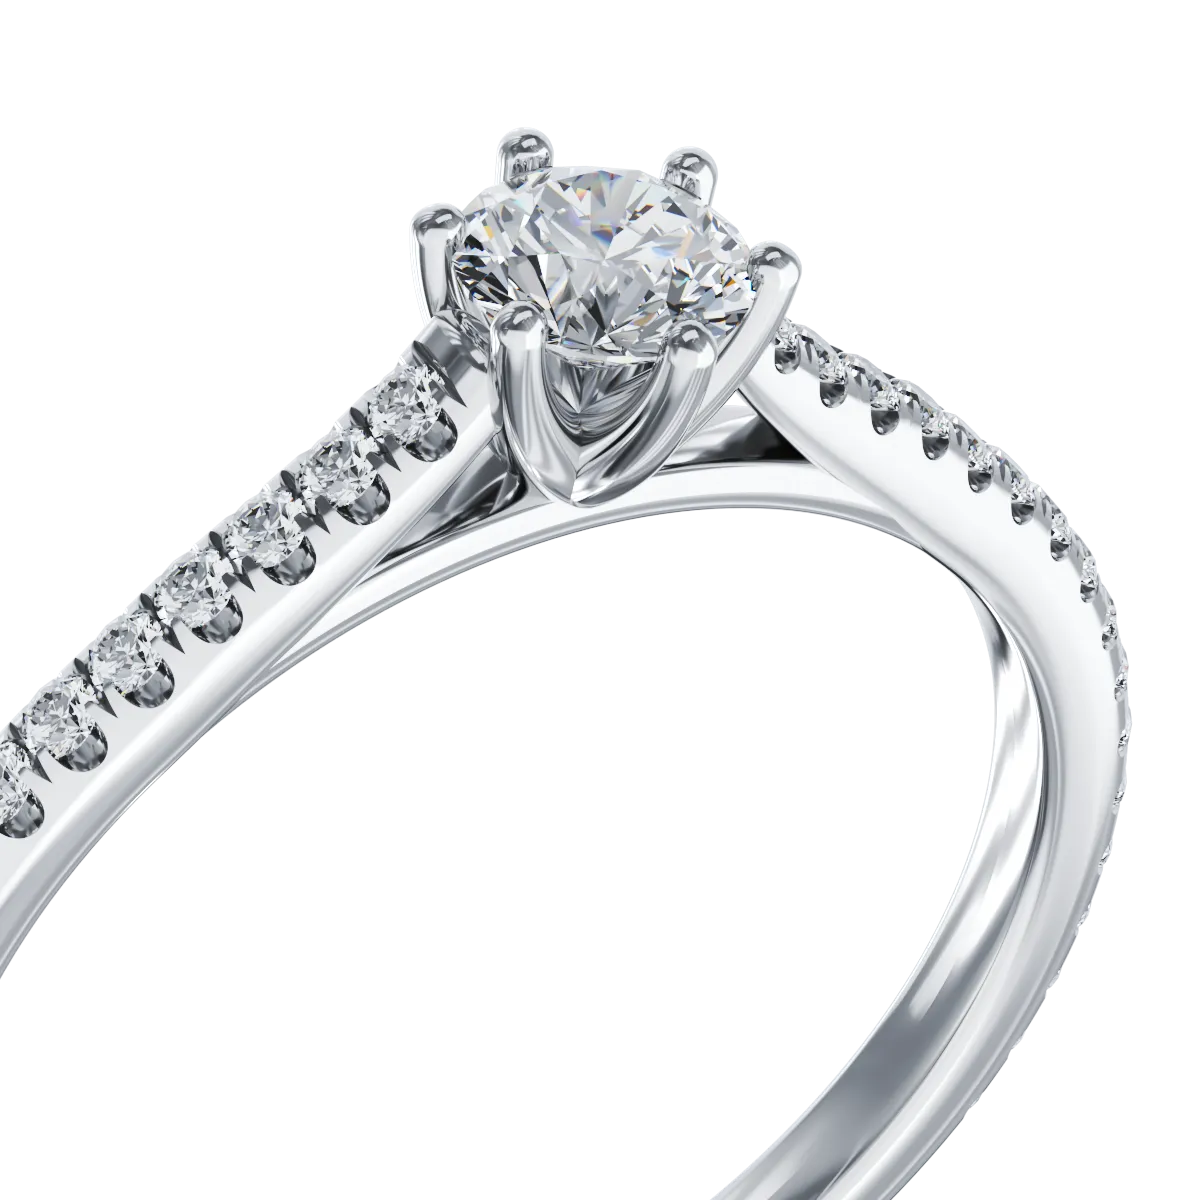 Platinum engagement ring with 0.24ct diamond and 0.18ct diamonds